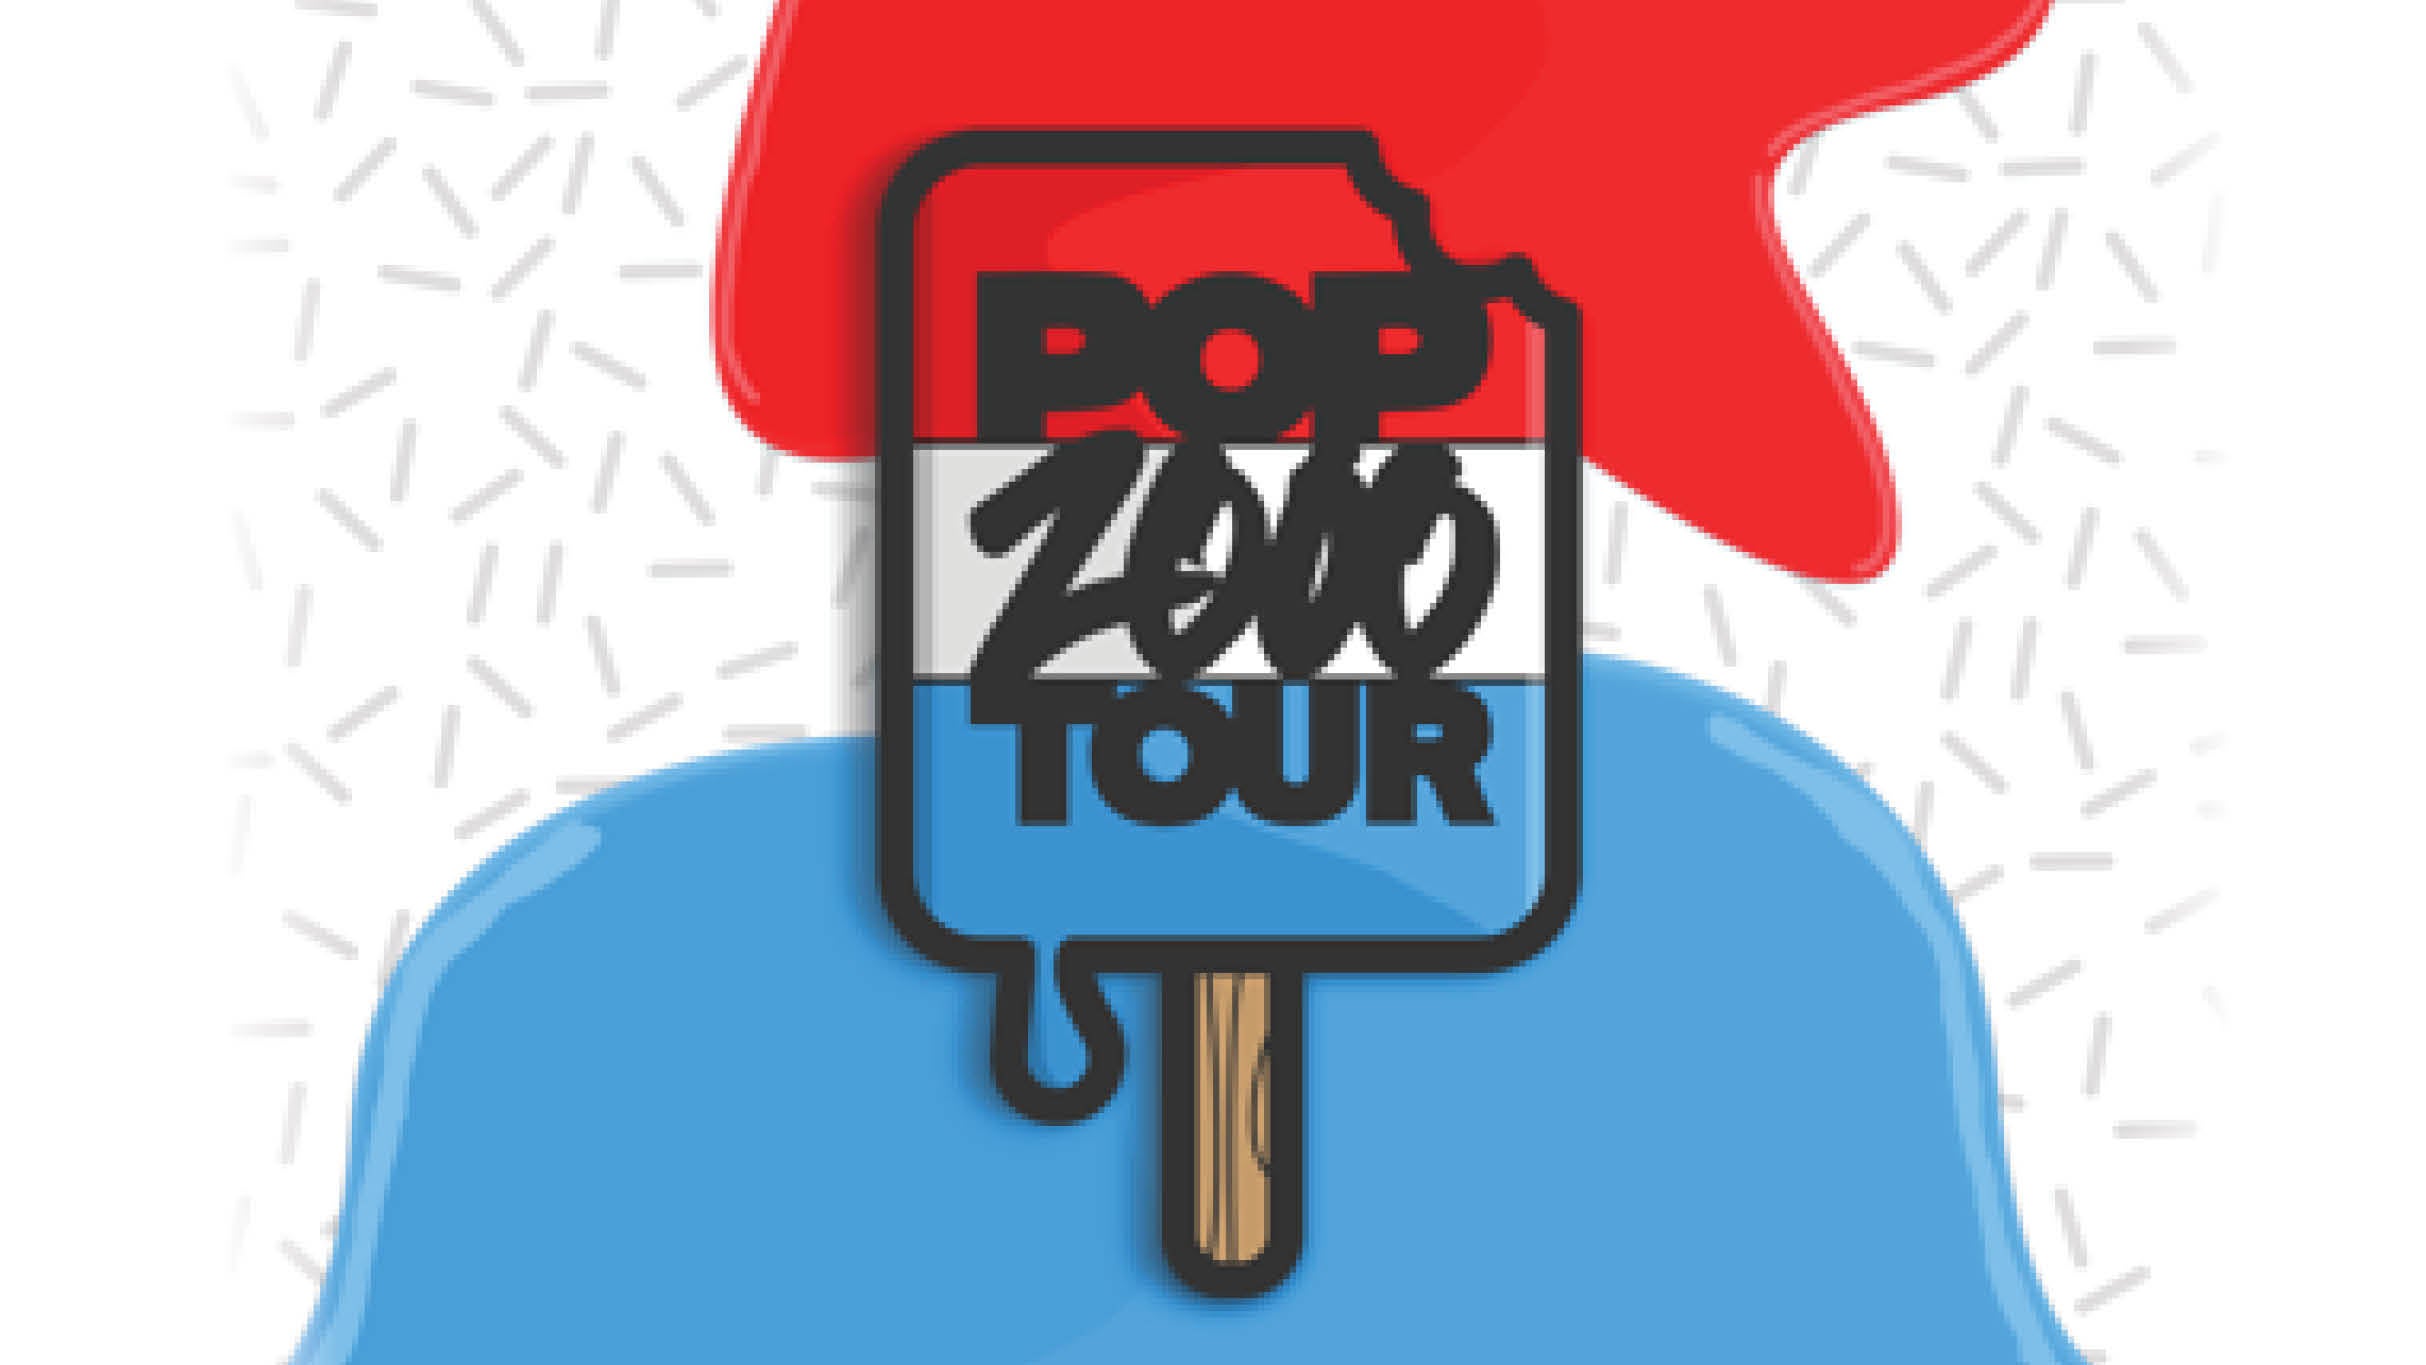 Hot Radio Maine presents: POP 2000 Tour pre-sale code for performance tickets in Hampton Beach, NH (Bernie's Beach Bar)